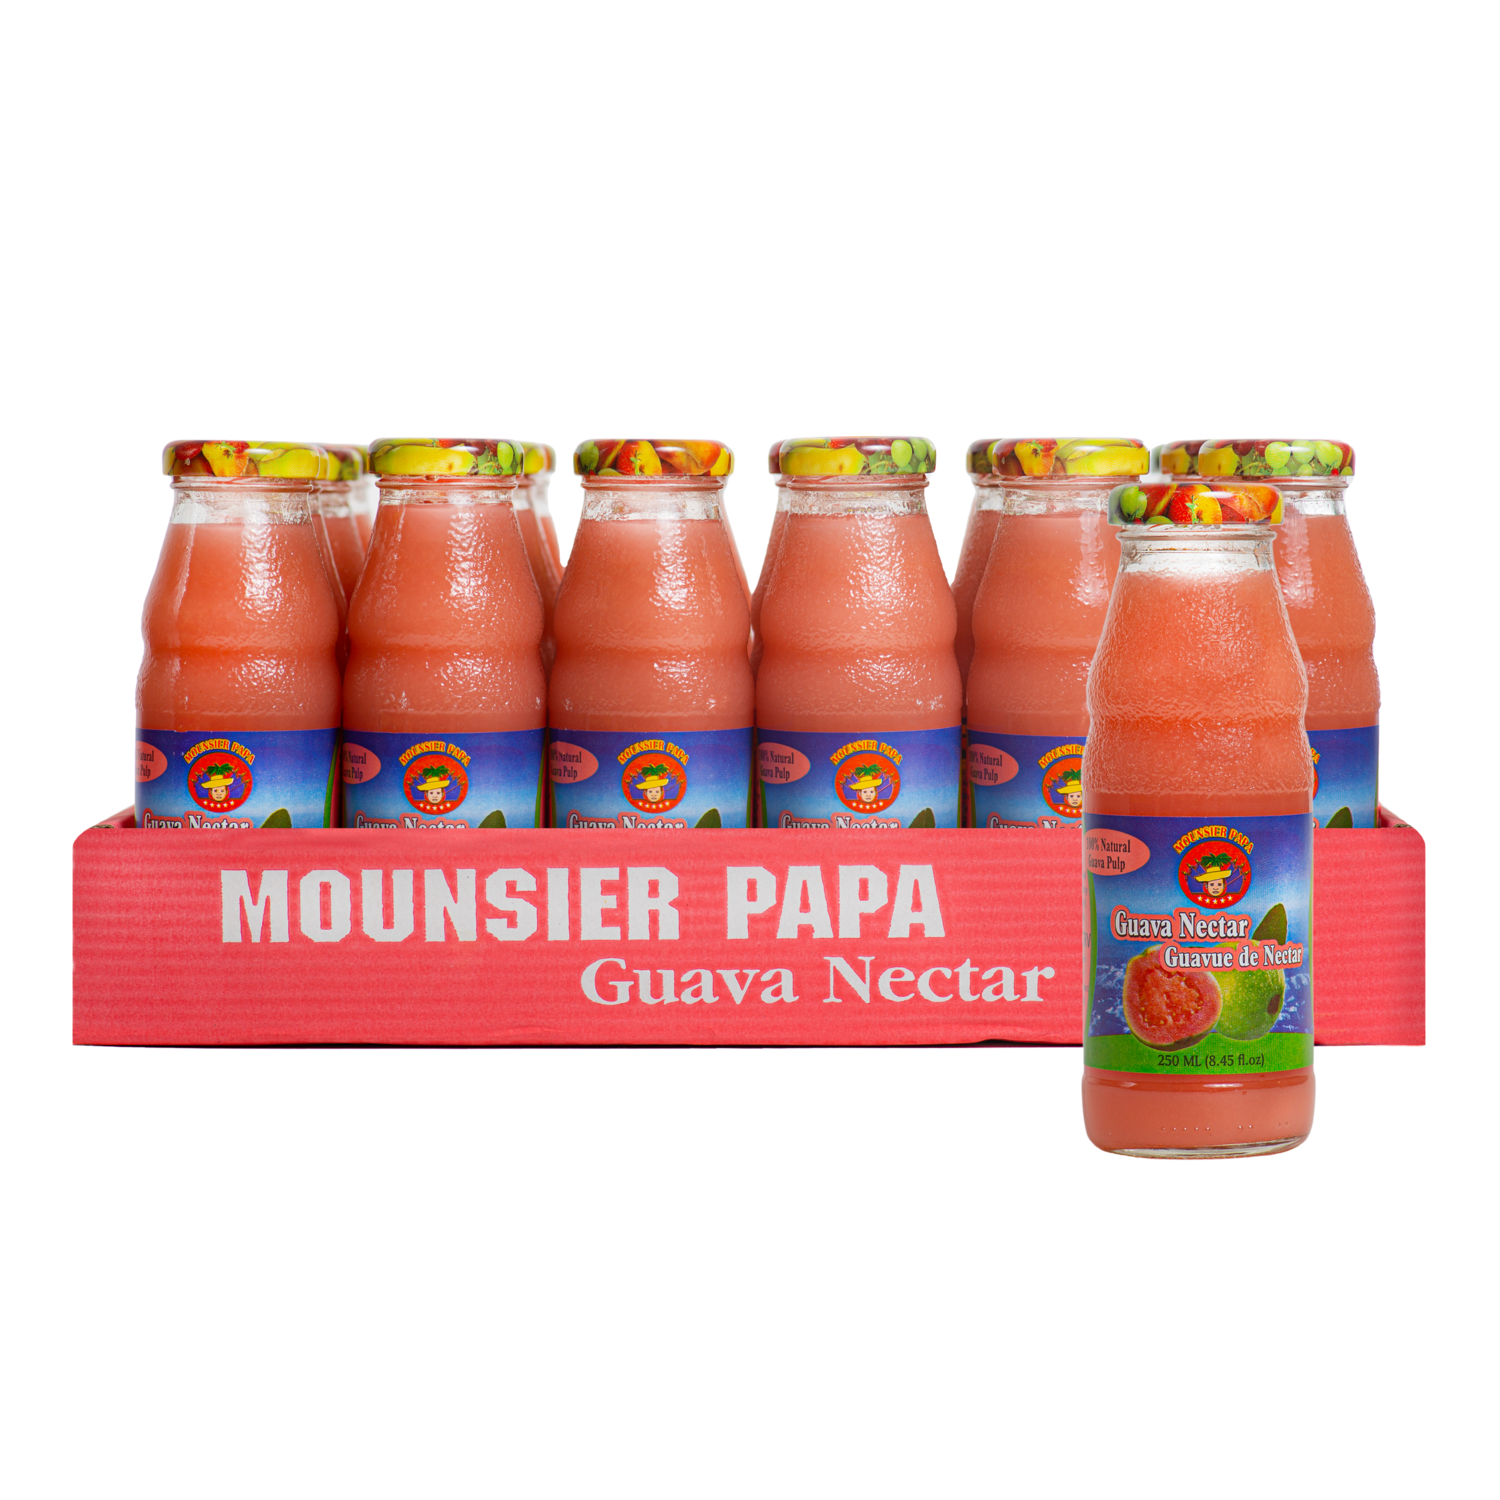 Mounsier Papa Guava Nectar 24 pack